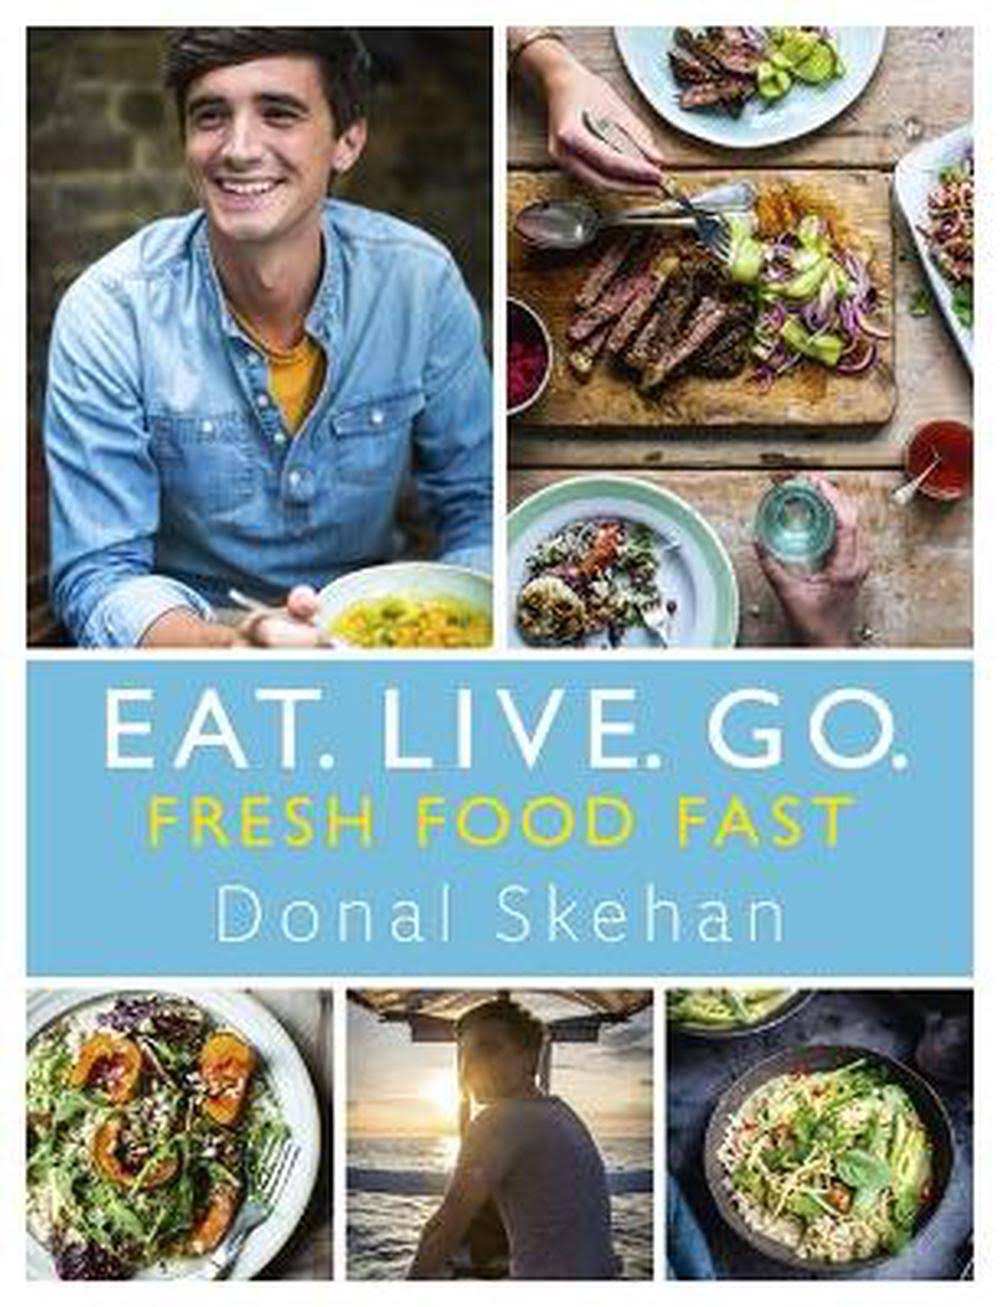 Eat. Live. Go: Fresh Food Fast - Donal Skehan